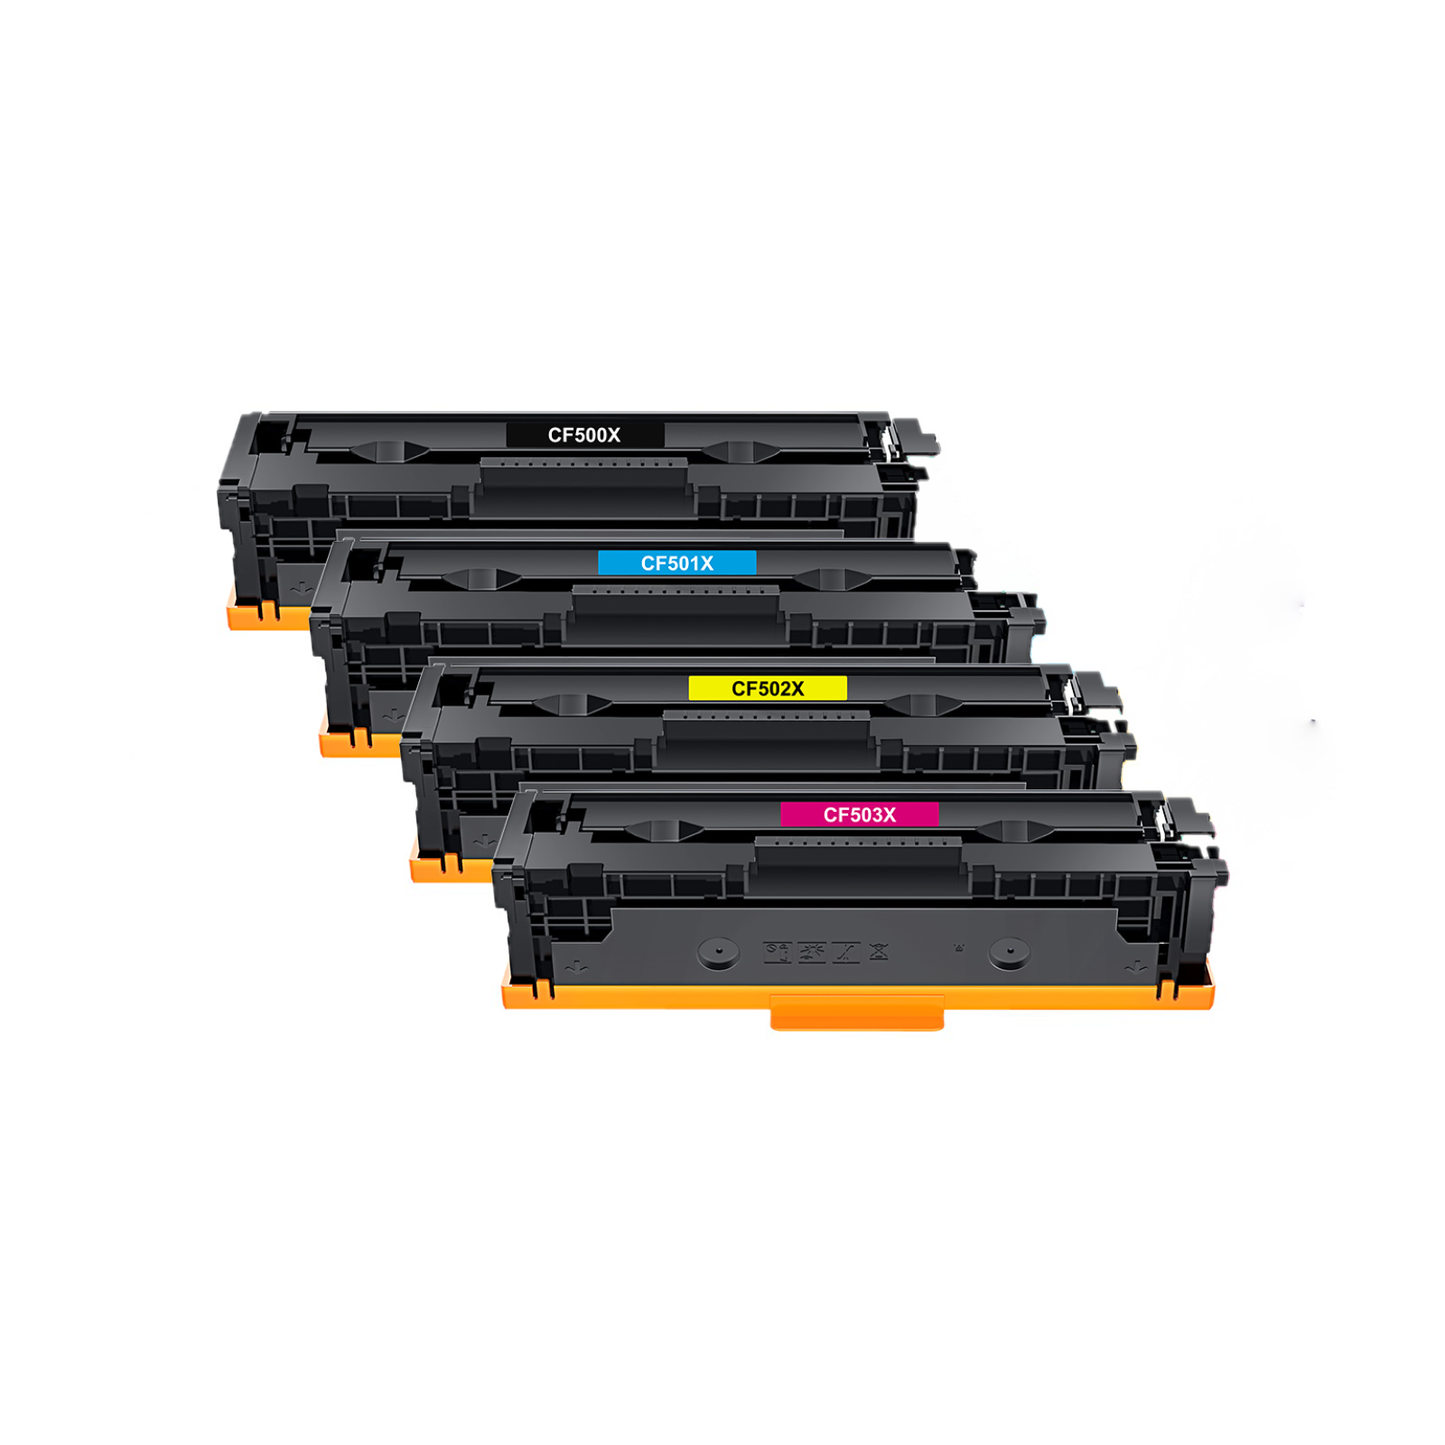 202X Toner Cartridge 4 Pack High-yield Compatible Replacement for HP 202X 202A CF500X CF501X CF502X CF503X Color Pro MFP M281fdw M281cdw M254dw M281fdn M254 M281 Printer Ink Black Cyan Yellow Magenta